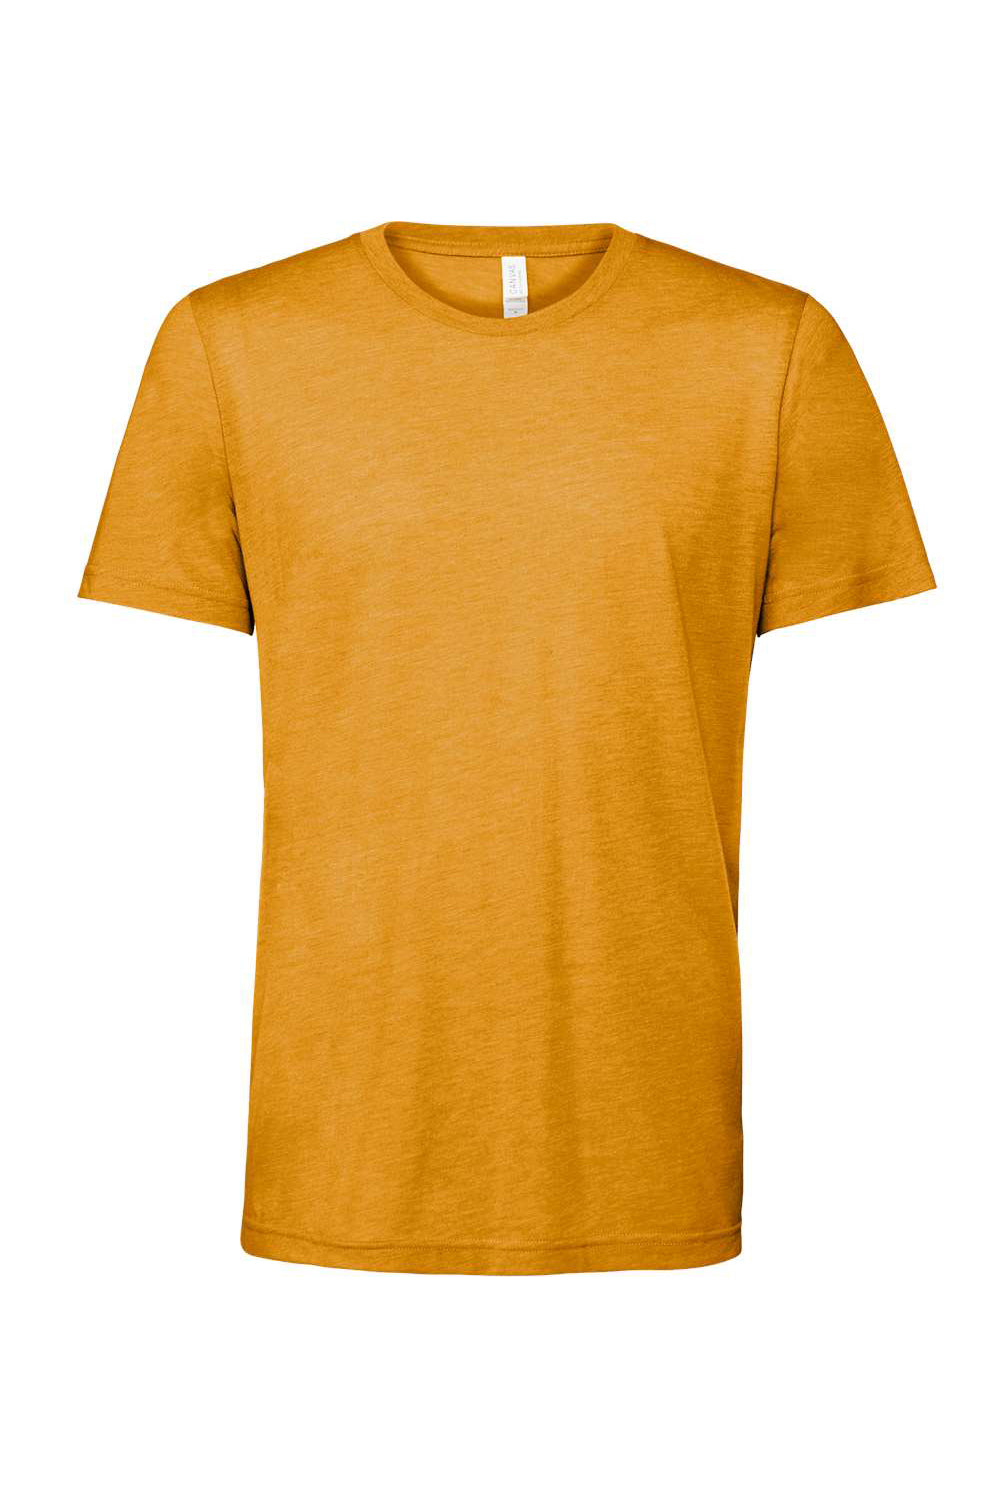 Bella + Canvas BC3413/3413C/3413 Mens Short Sleeve Crewneck T-Shirt Mustard Yellow Flat Front